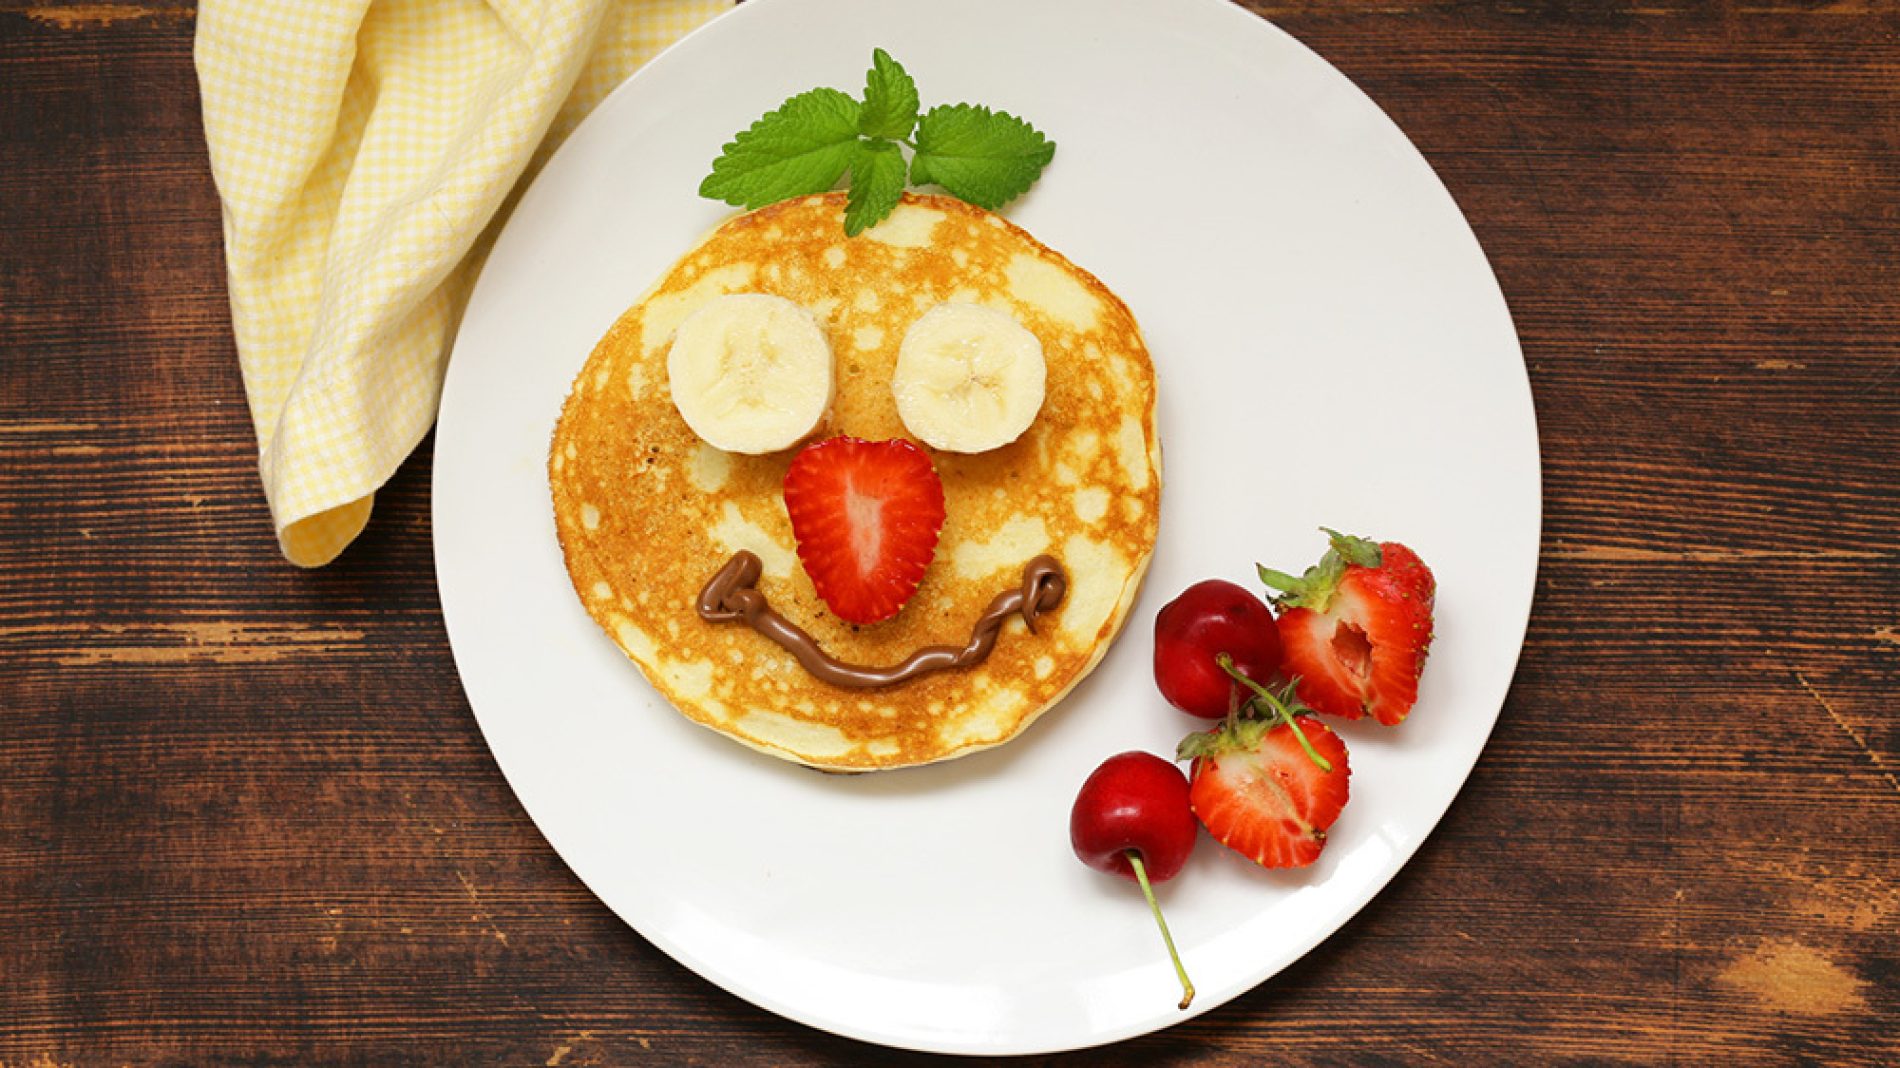 A lovely smiling pancake